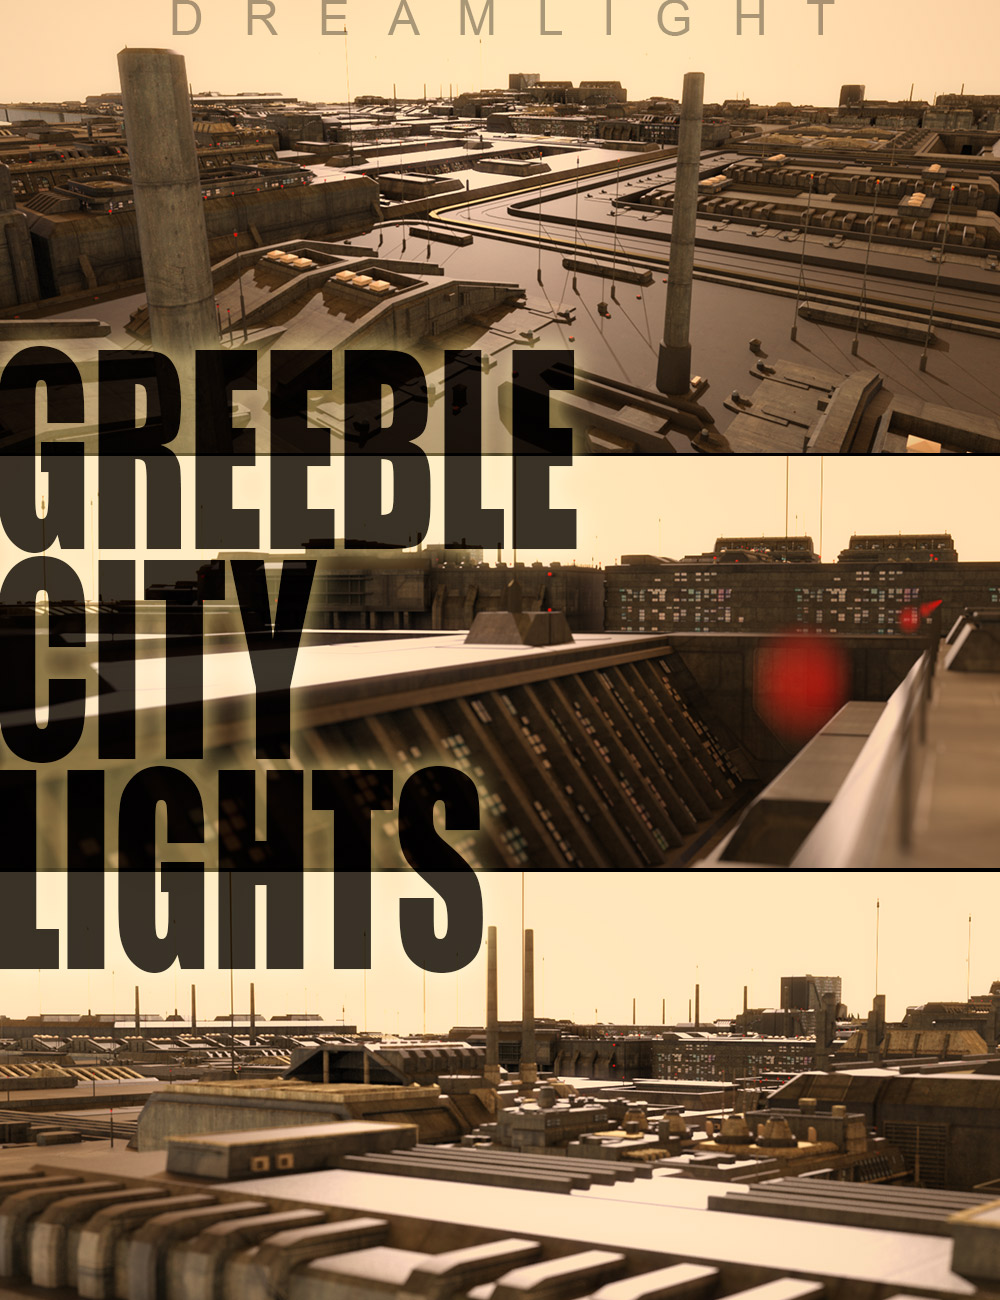 Greeble City Lights by: Dreamlight, 3D Models by Daz 3D